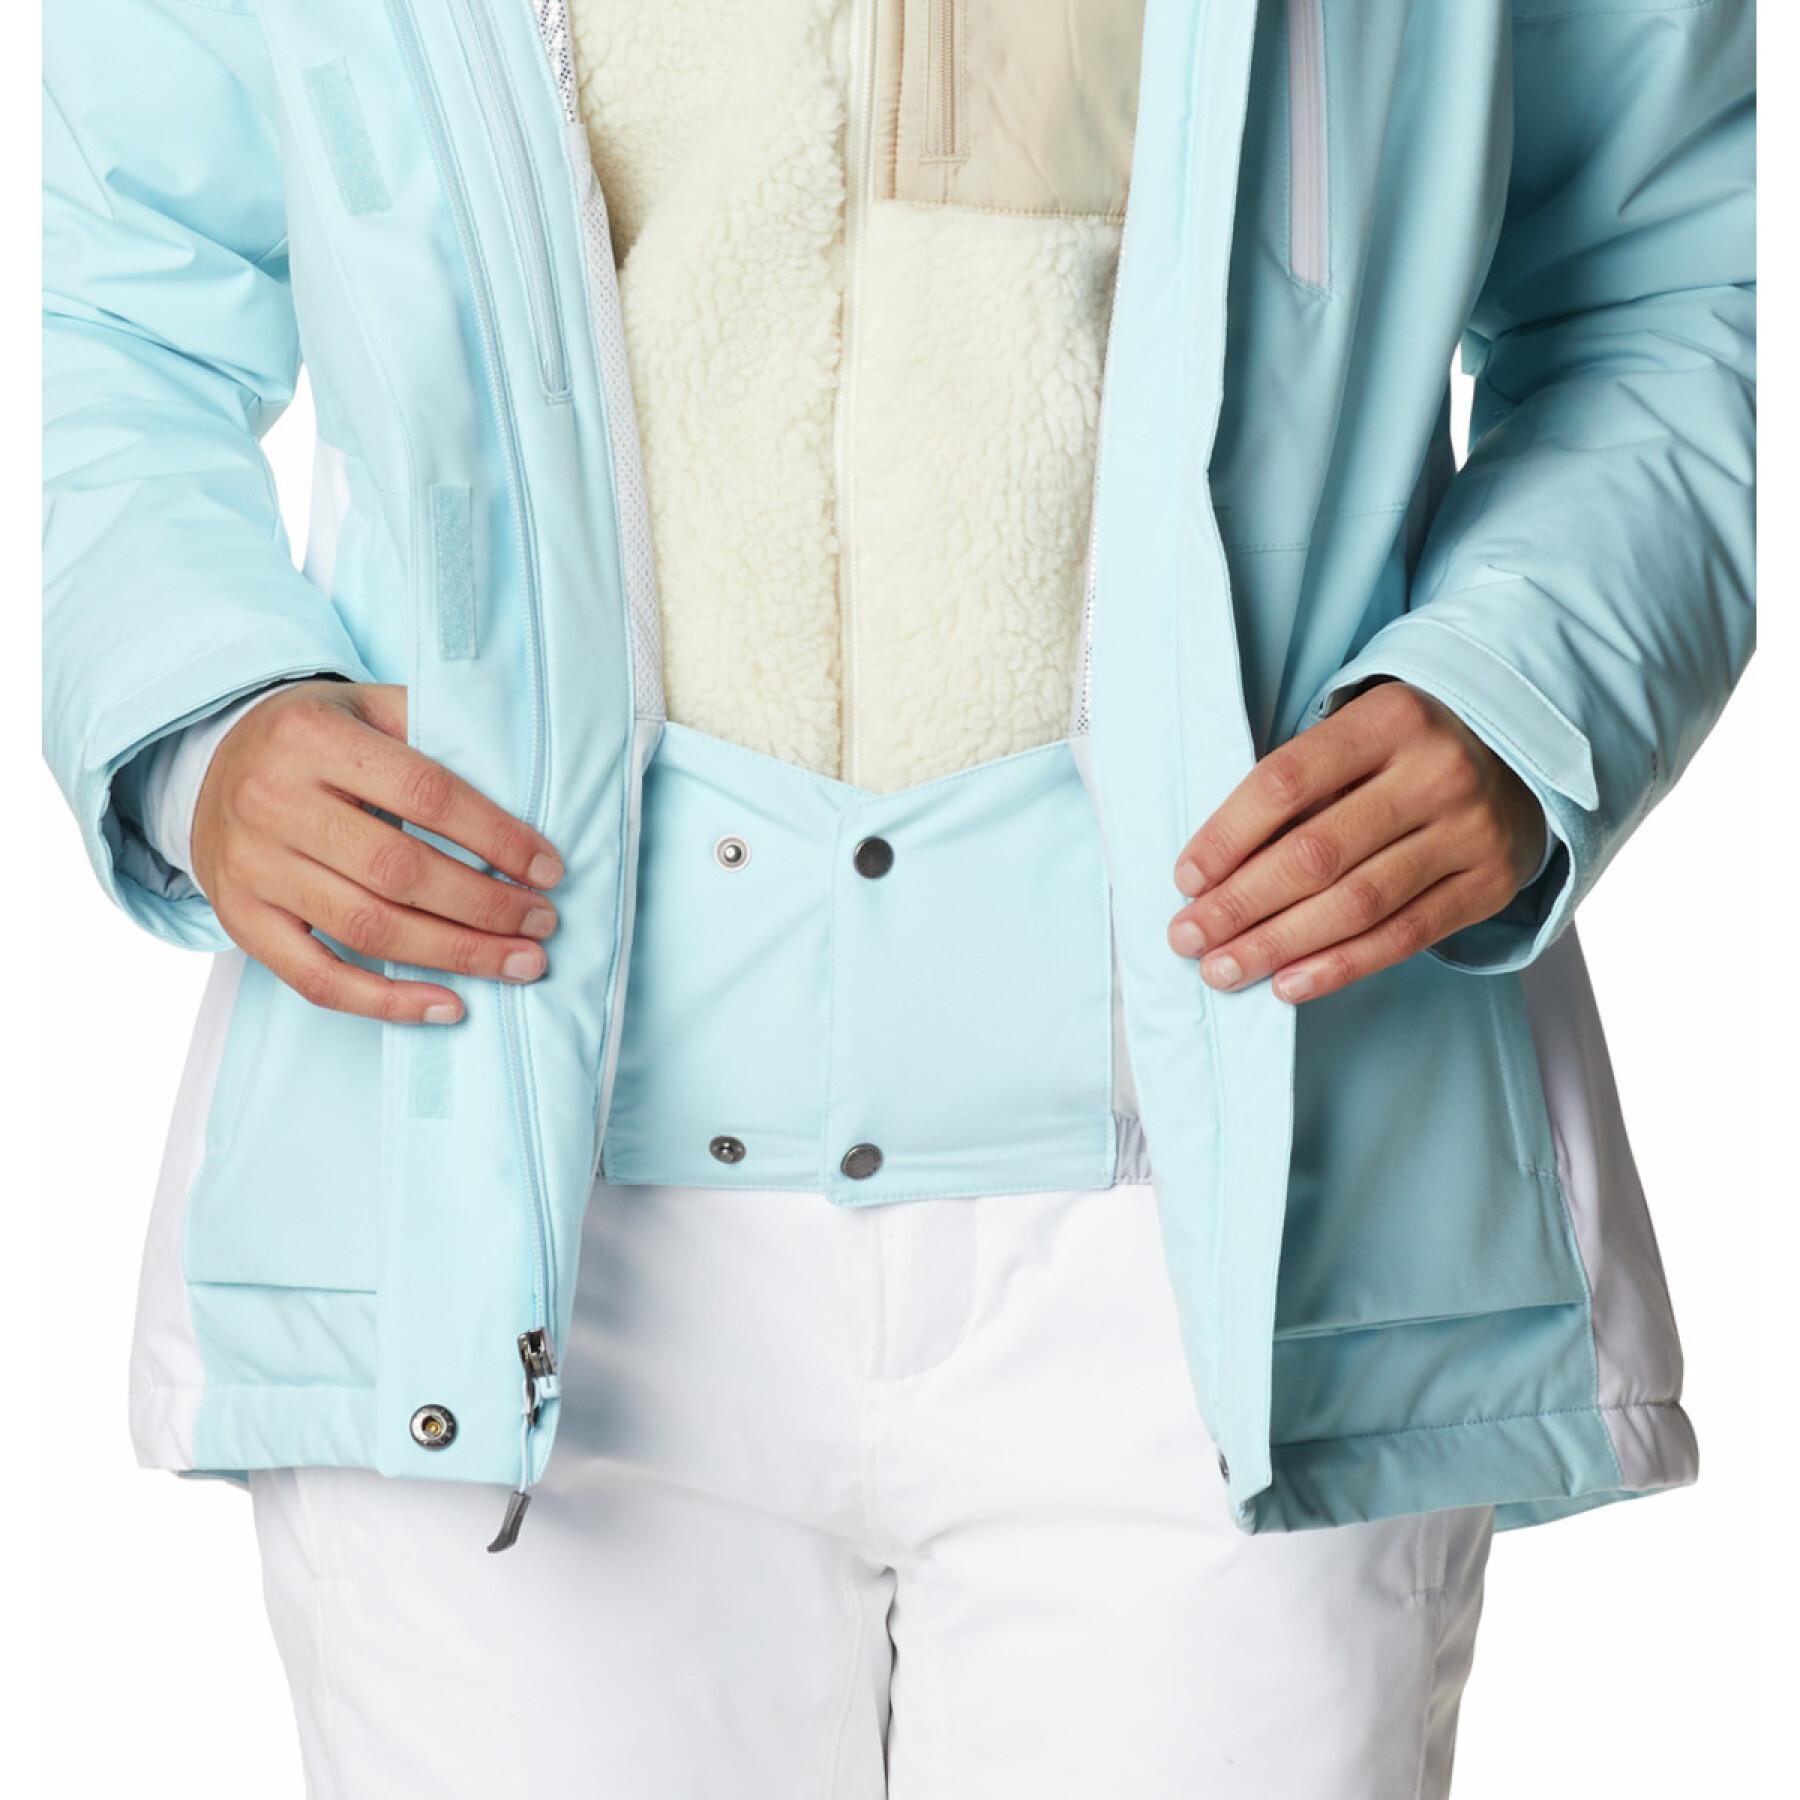 Women's waterproof jacket Columbia Ava Alpine Insulated